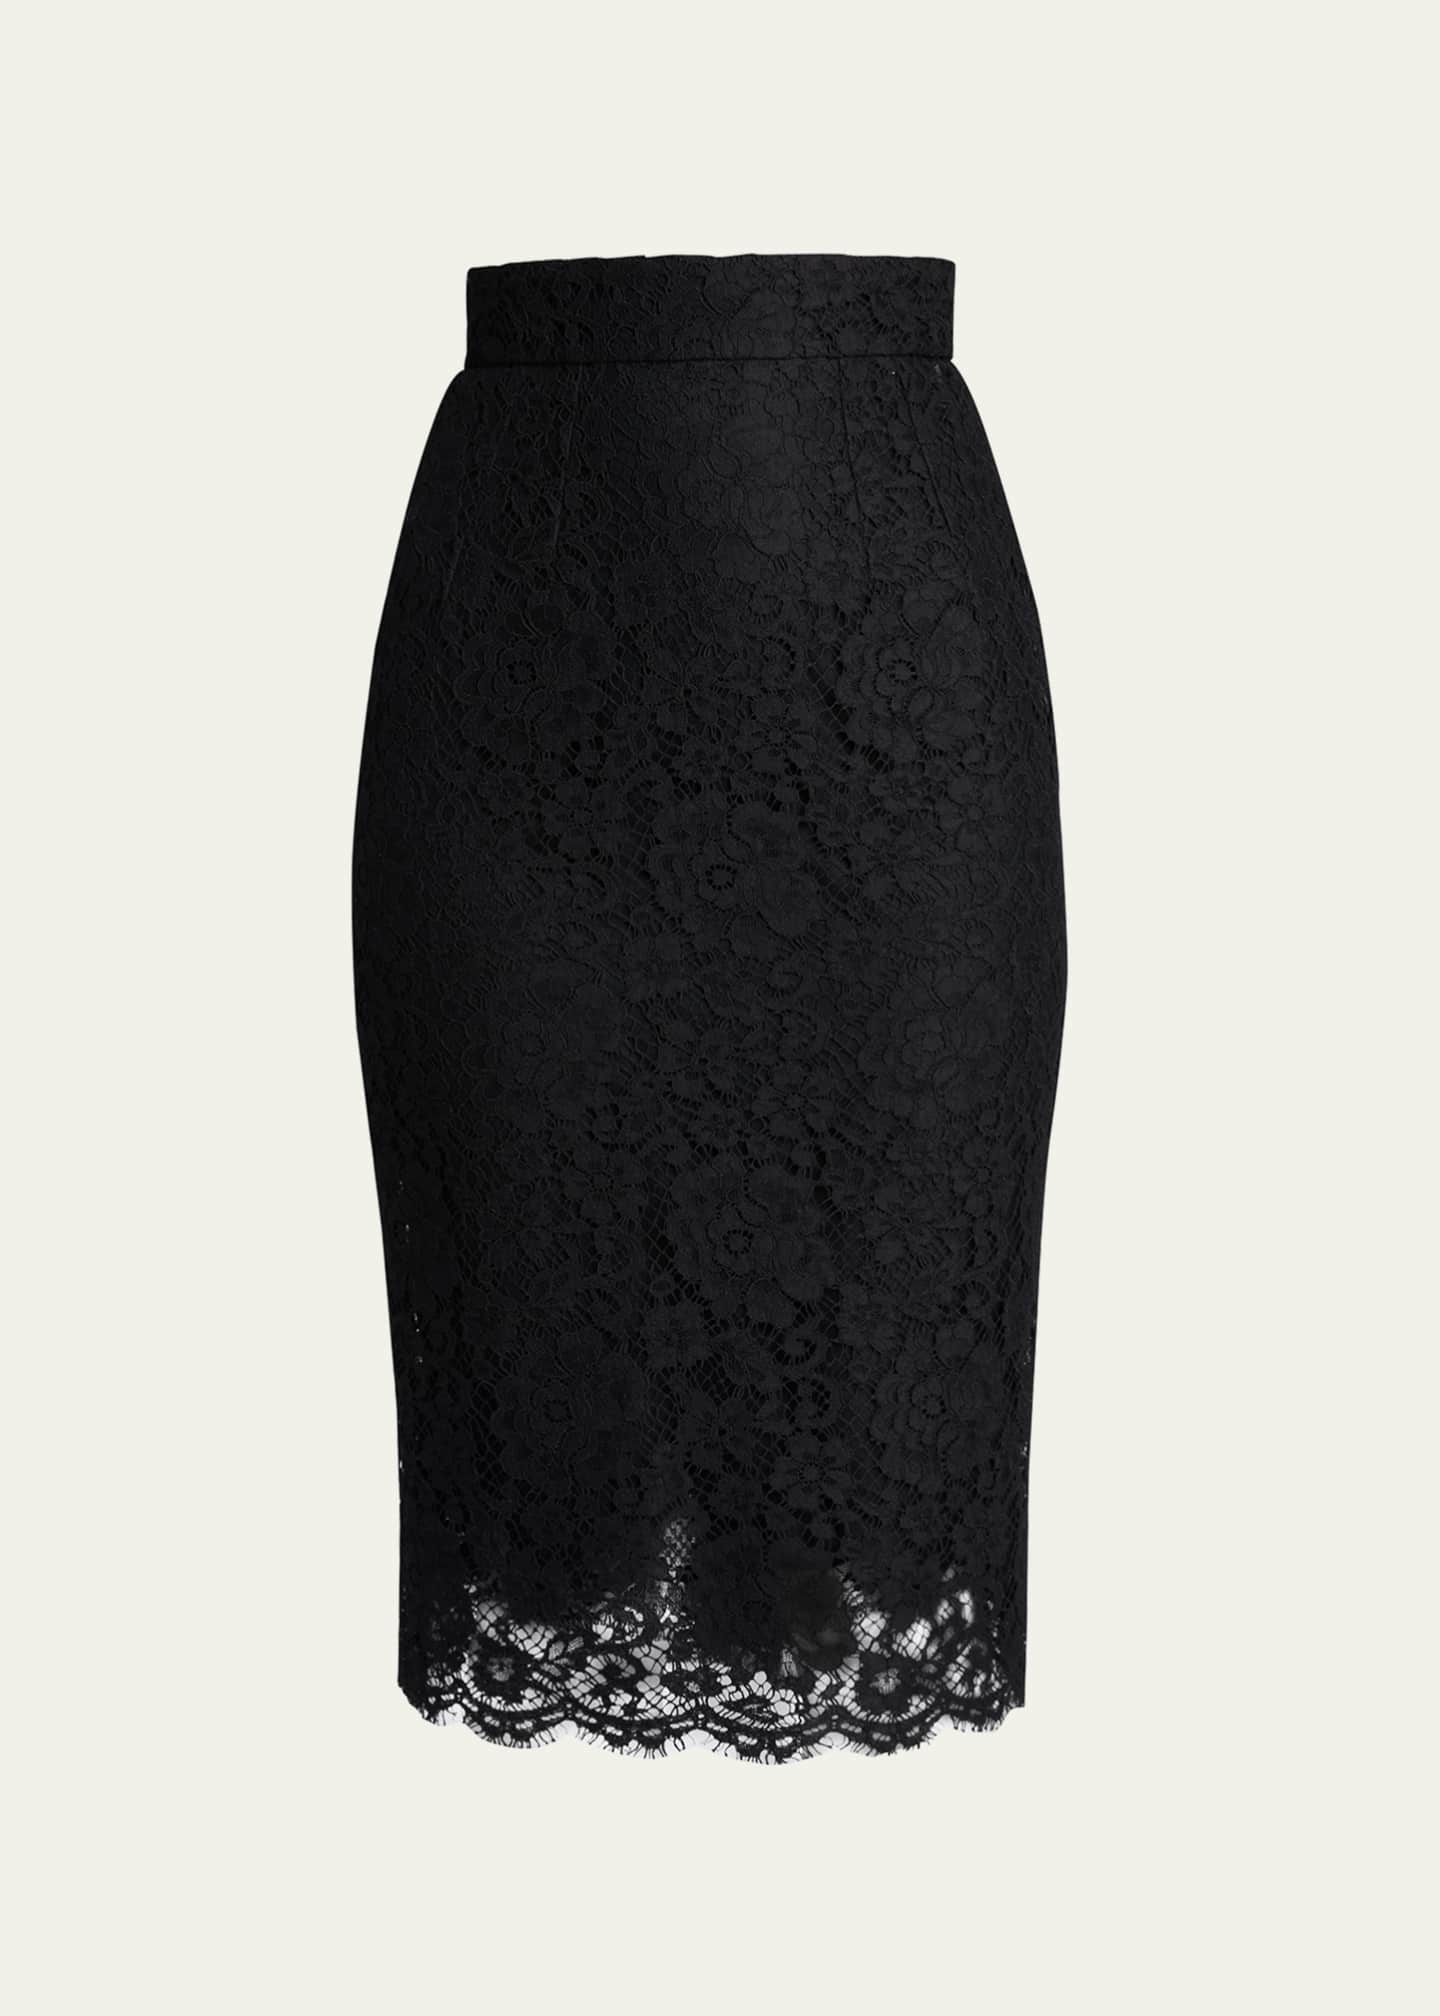 Dolce&Gabbana Lace Pencil Skirt - Bergdorf Goodman